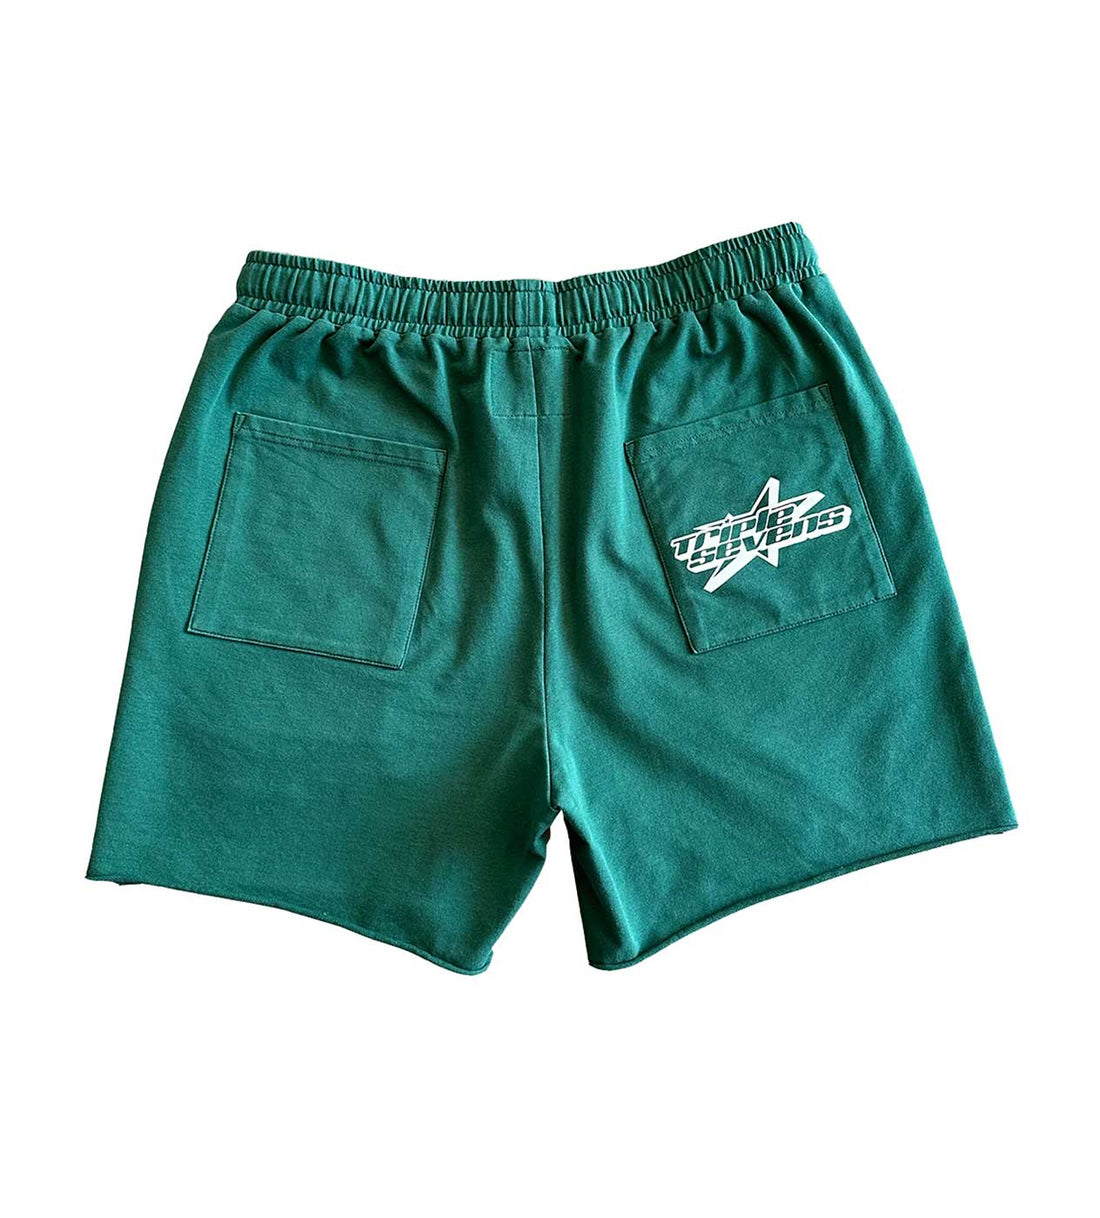 Triple Sevens Green Shorts Back View